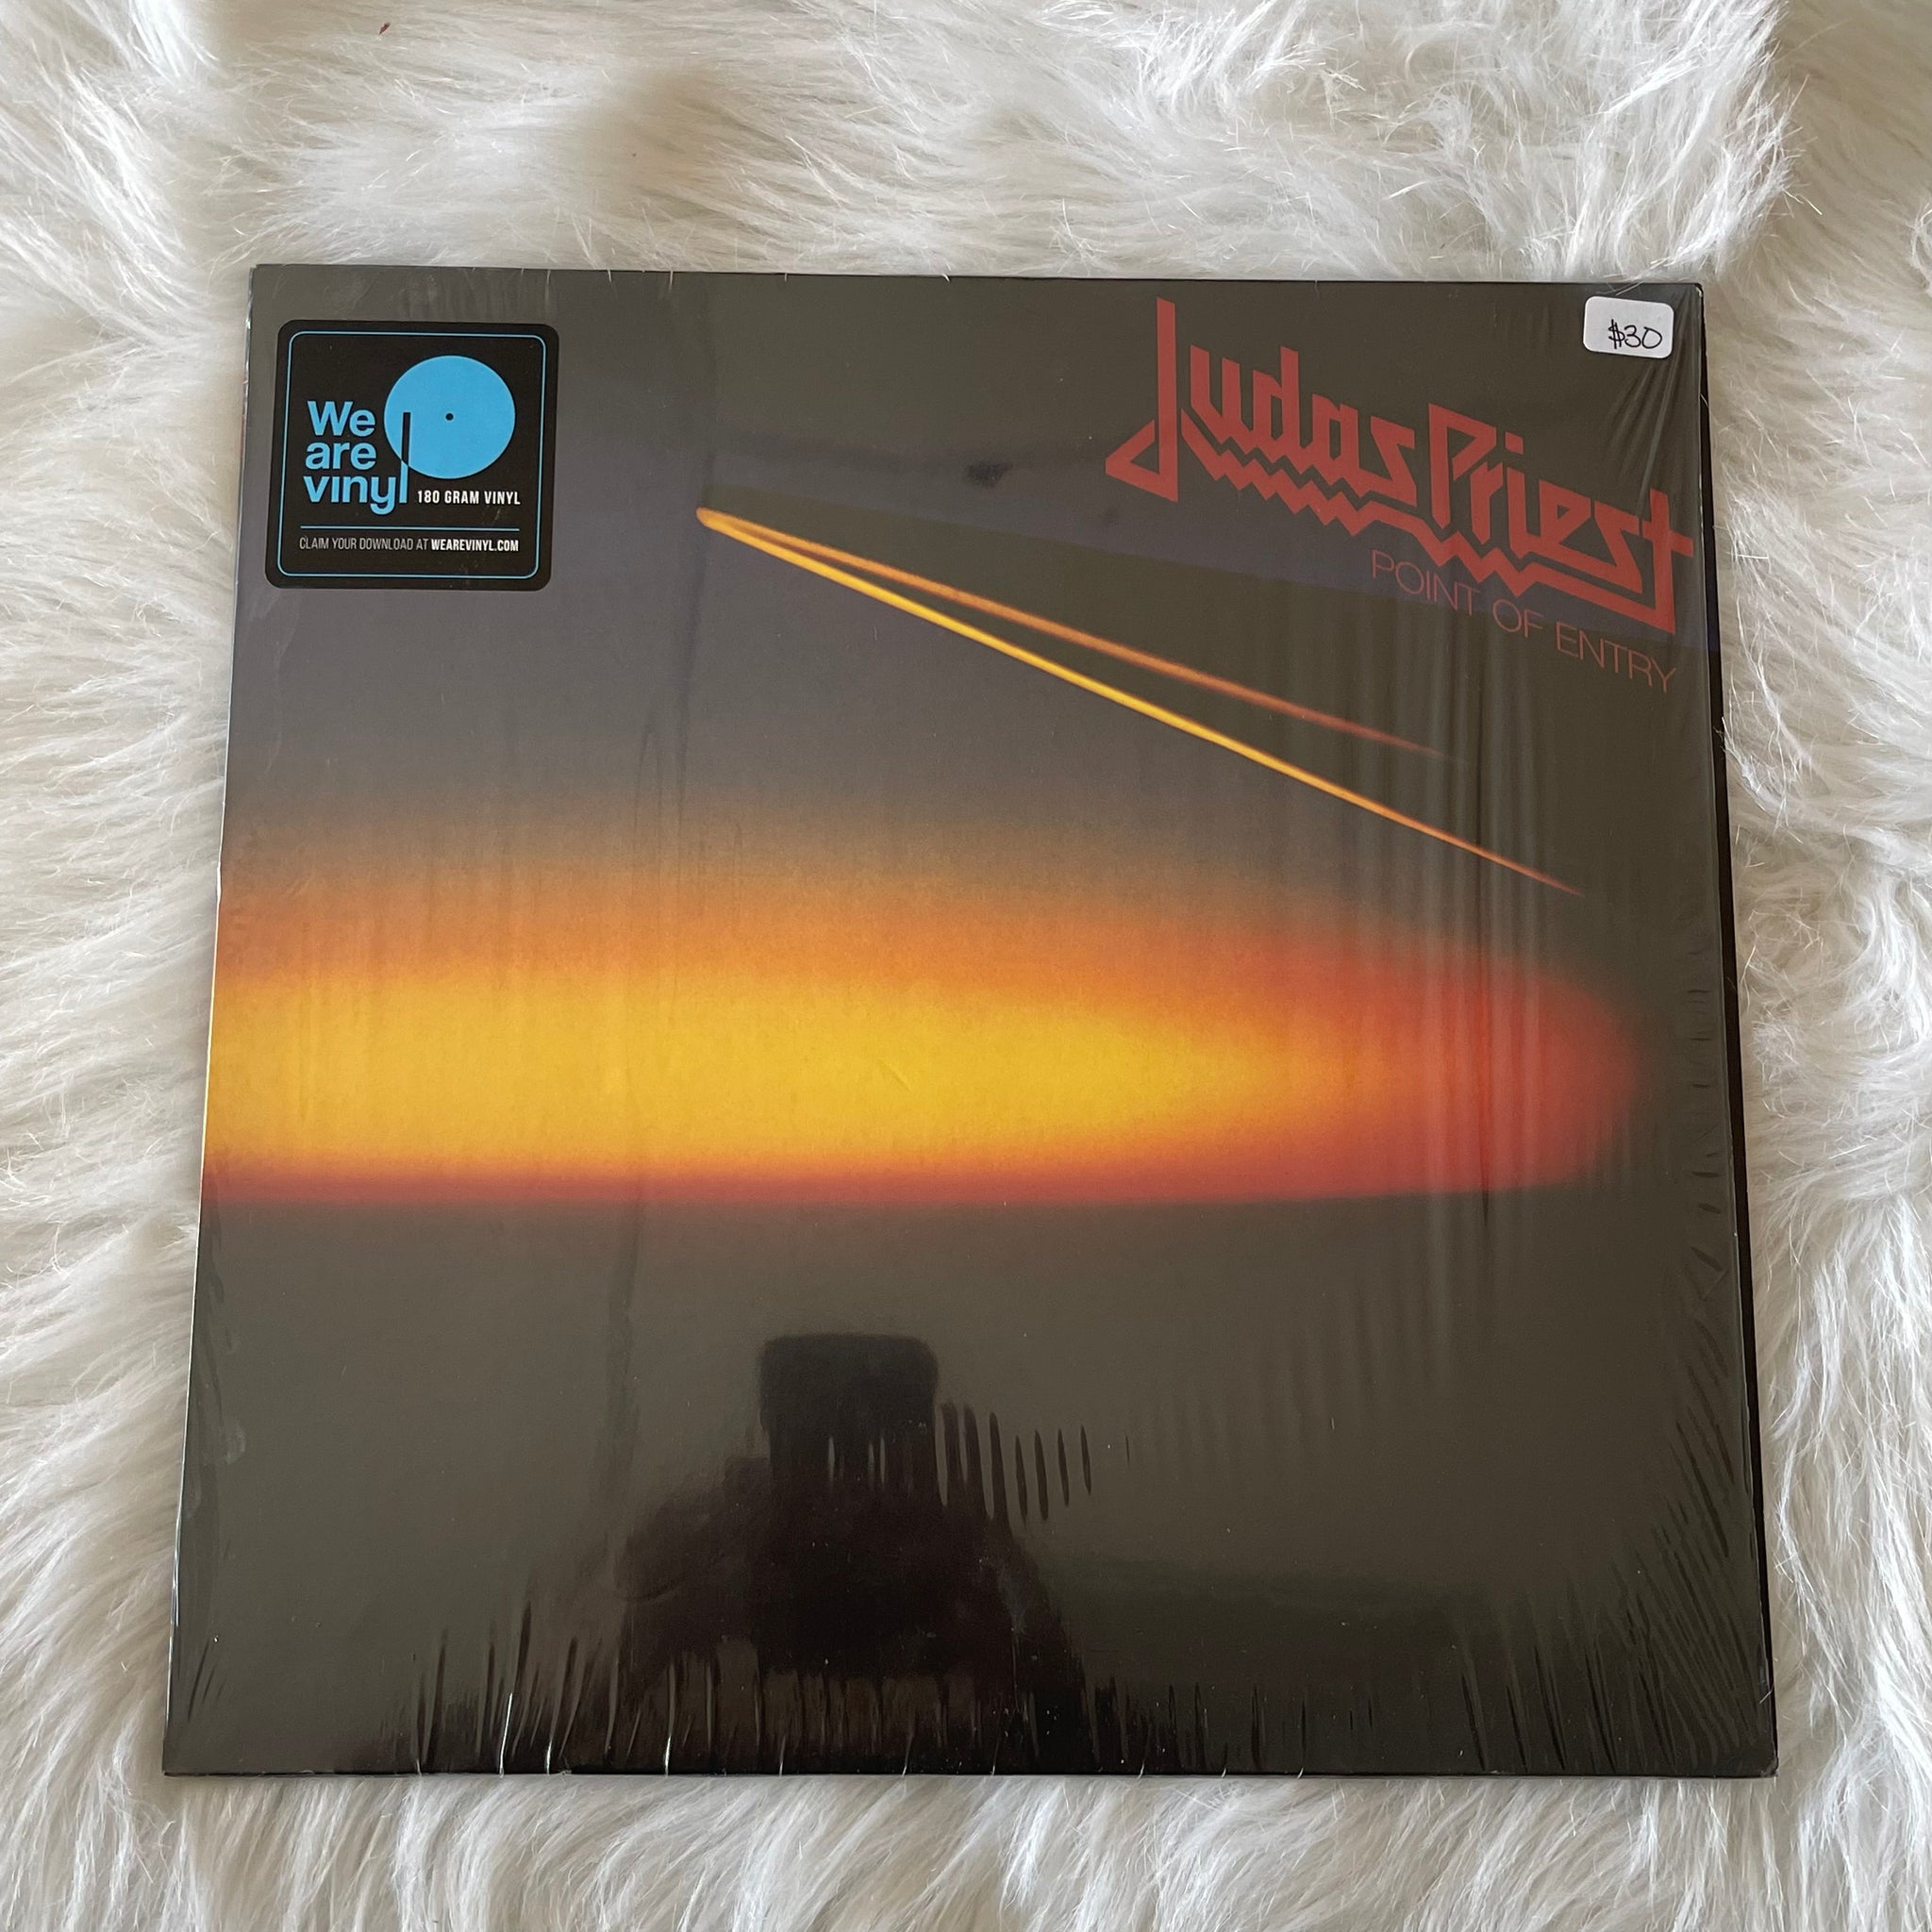 Judas Priest-Point of Entry